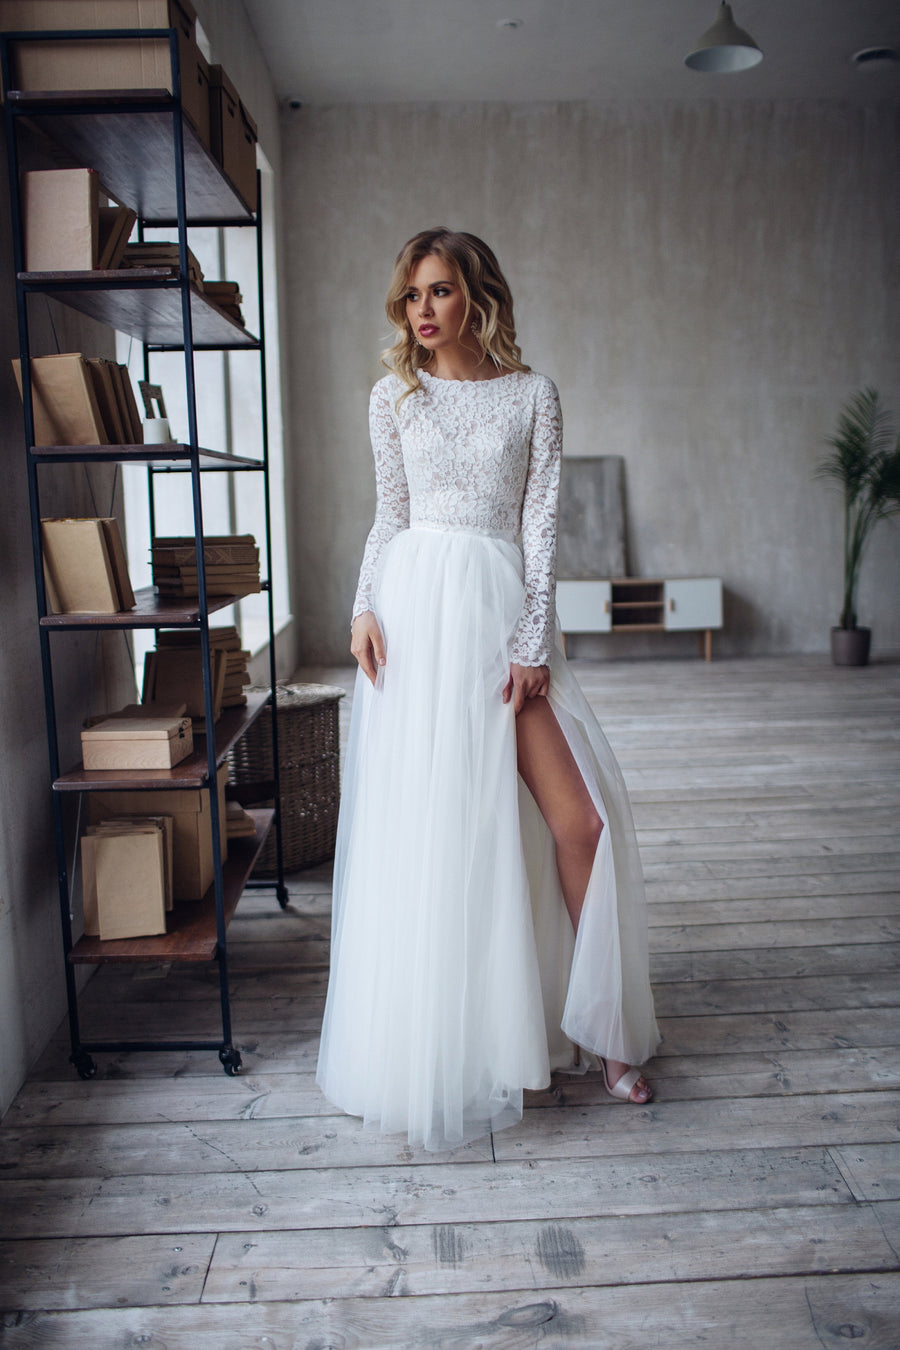 Bridal Lace Crop Top | Crop Top Wedding Dress | Milabridal